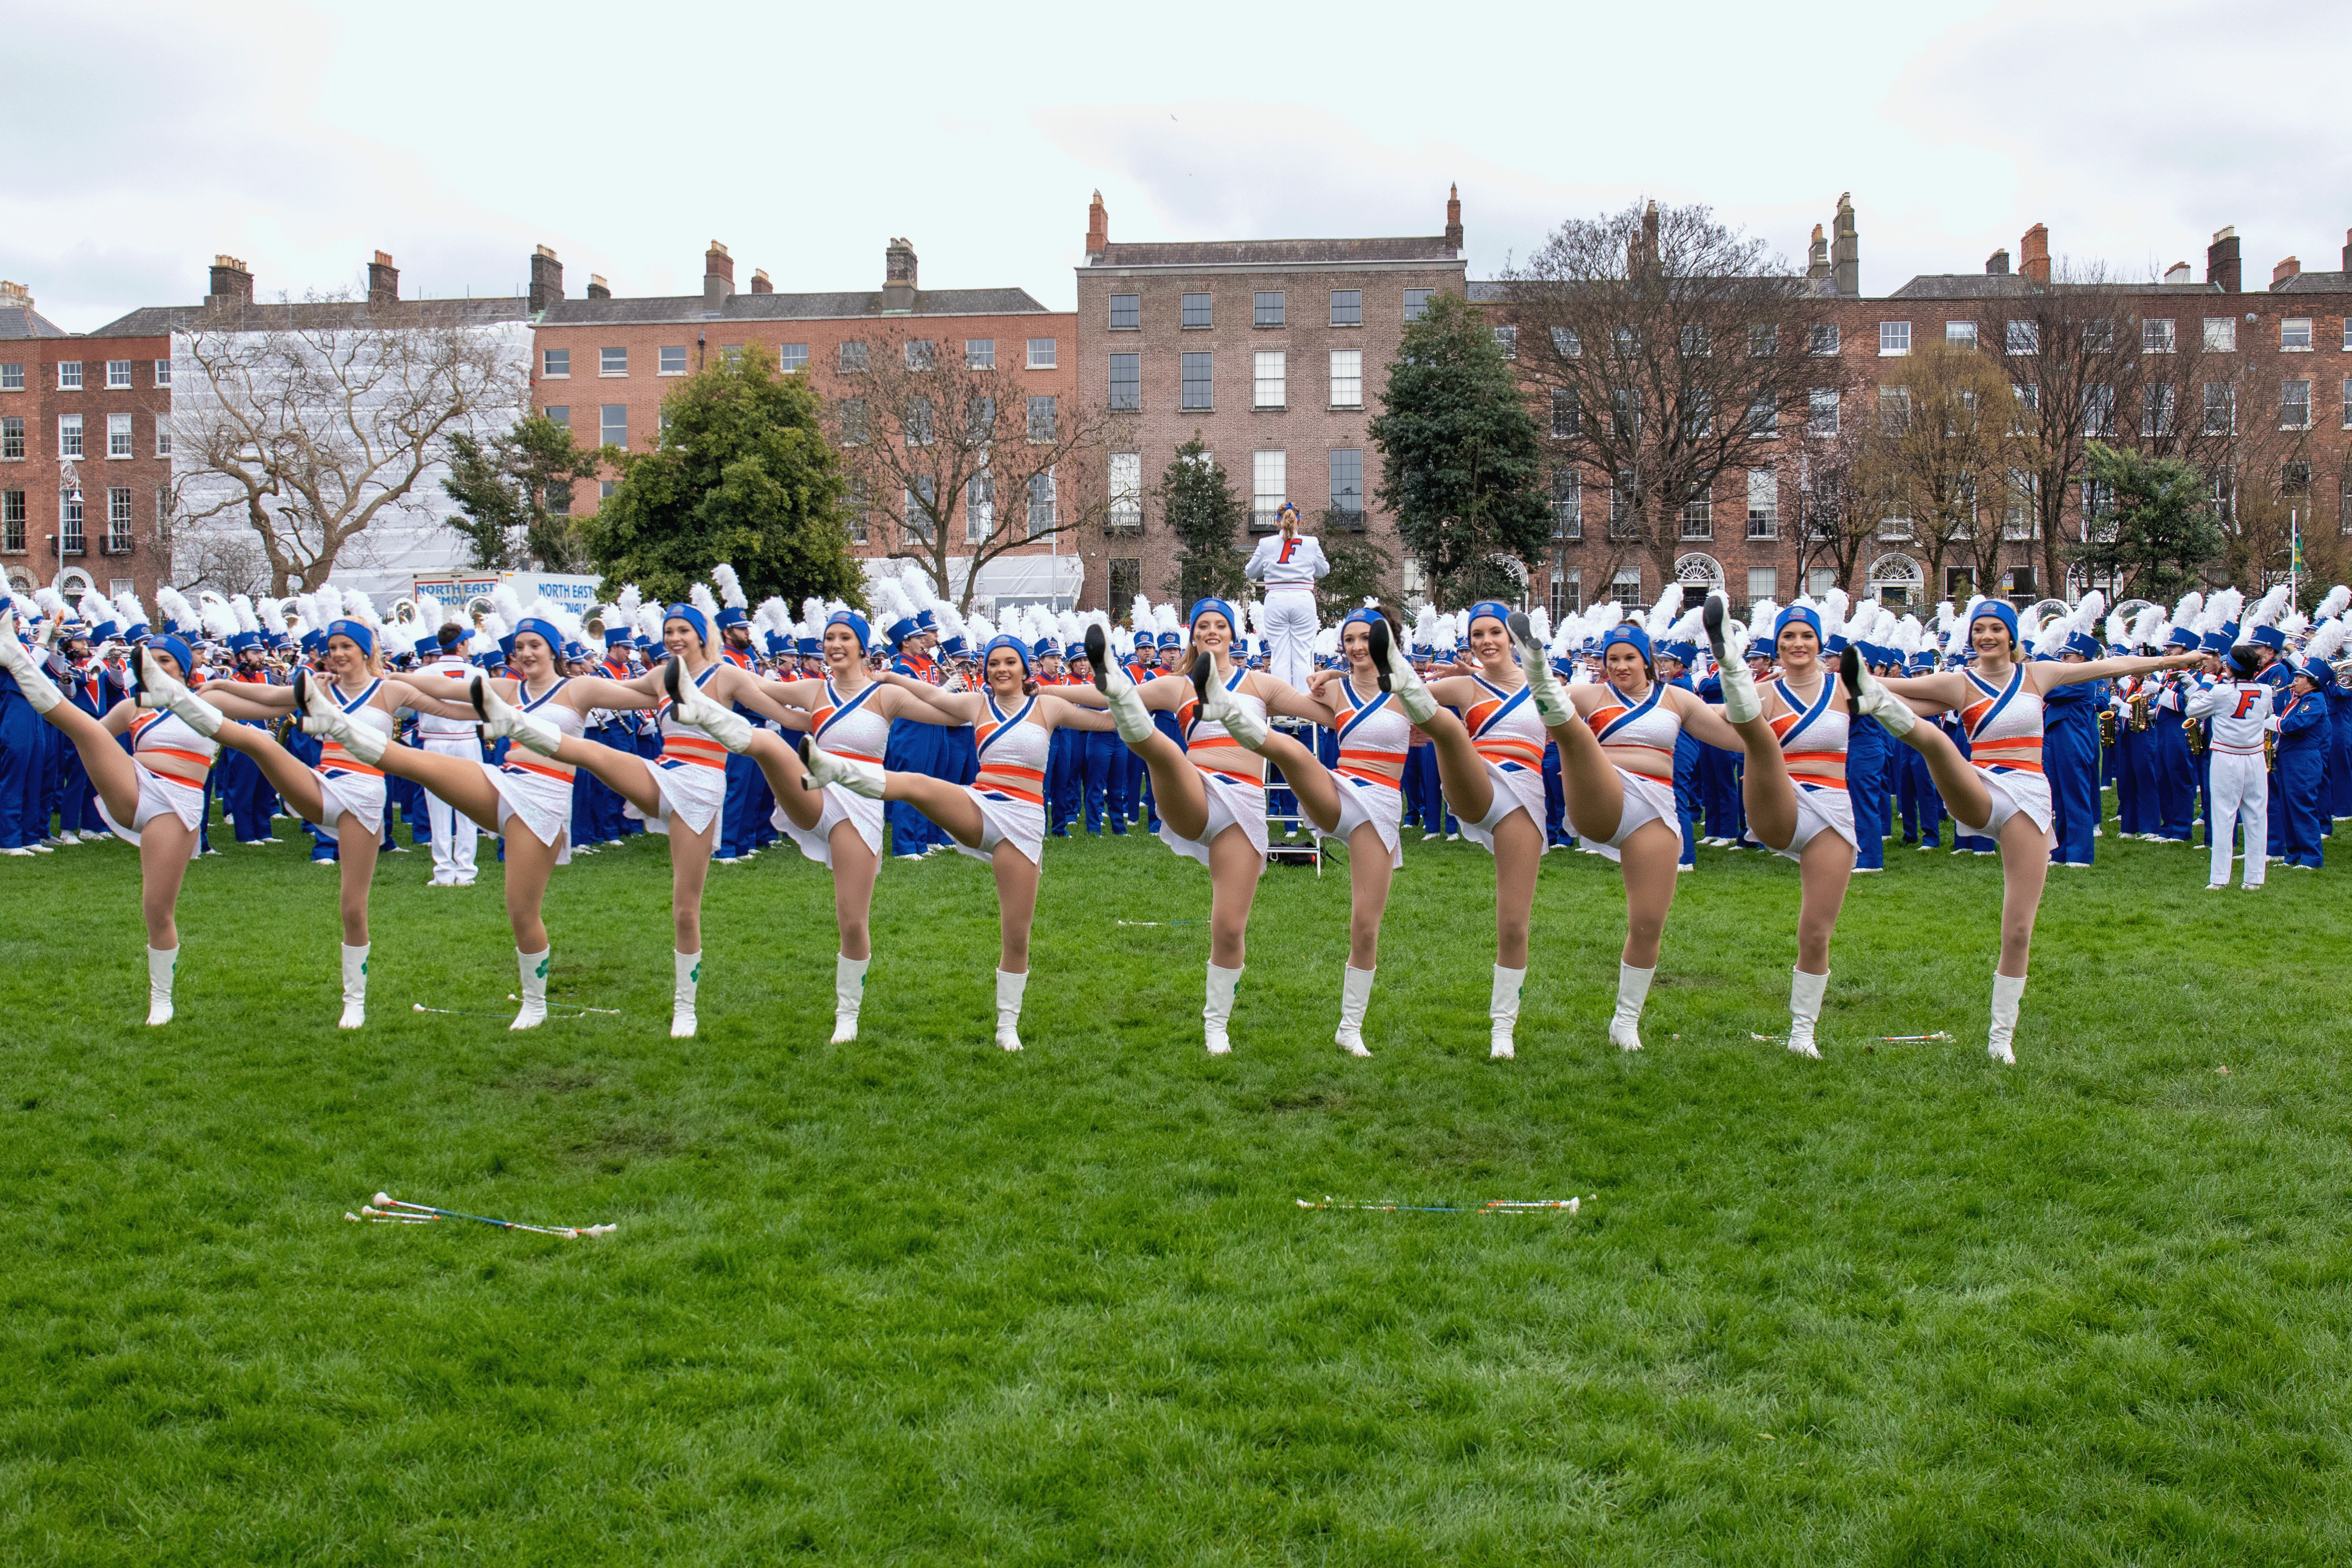 Baton twirlers perform in Dublin, Ireland.